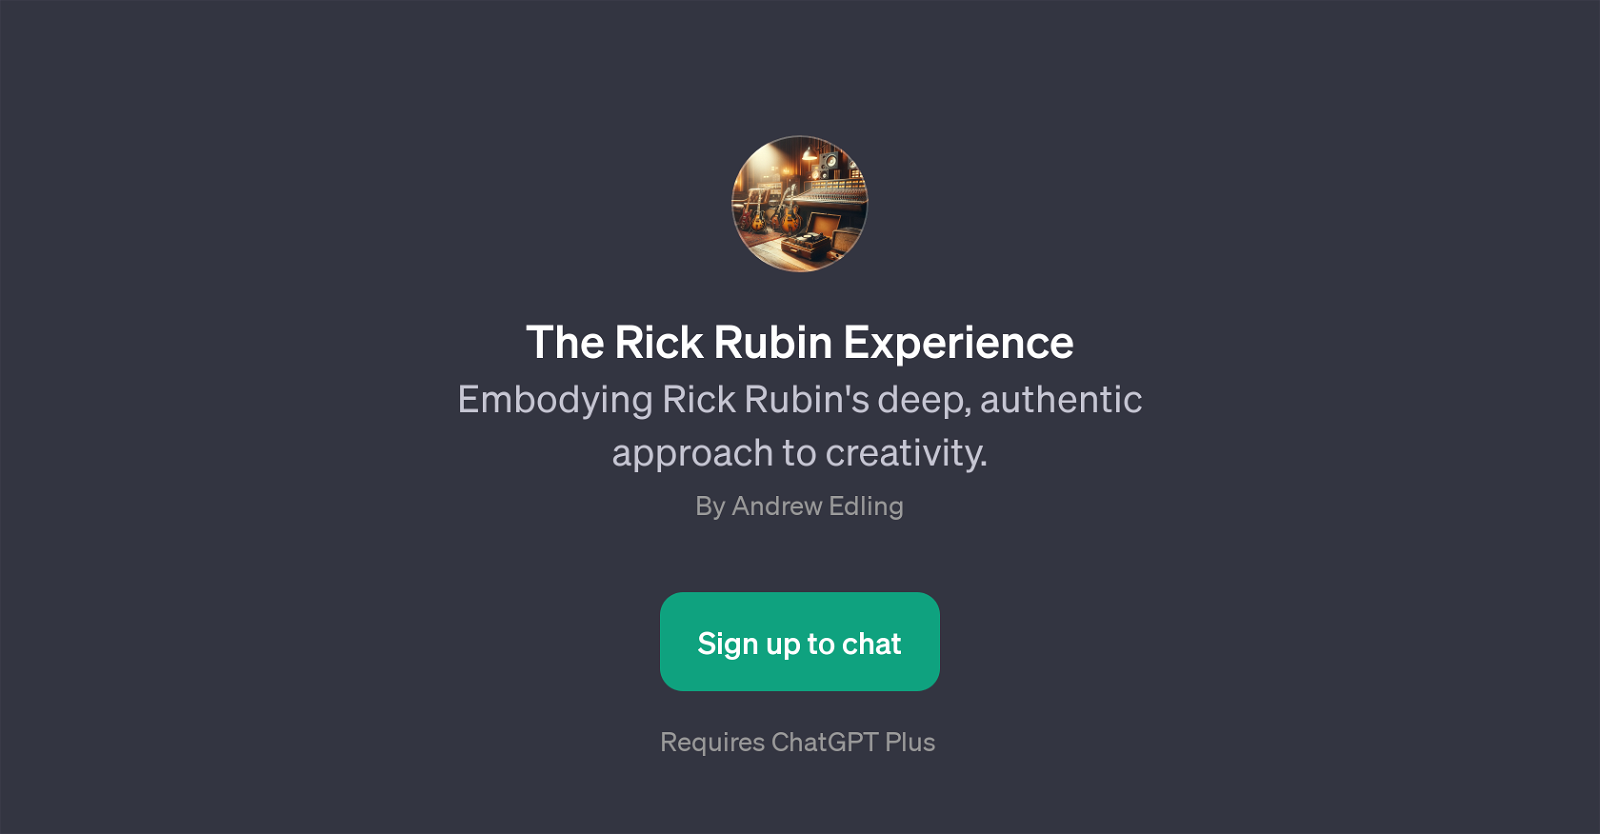 The Rick Rubin Experience website